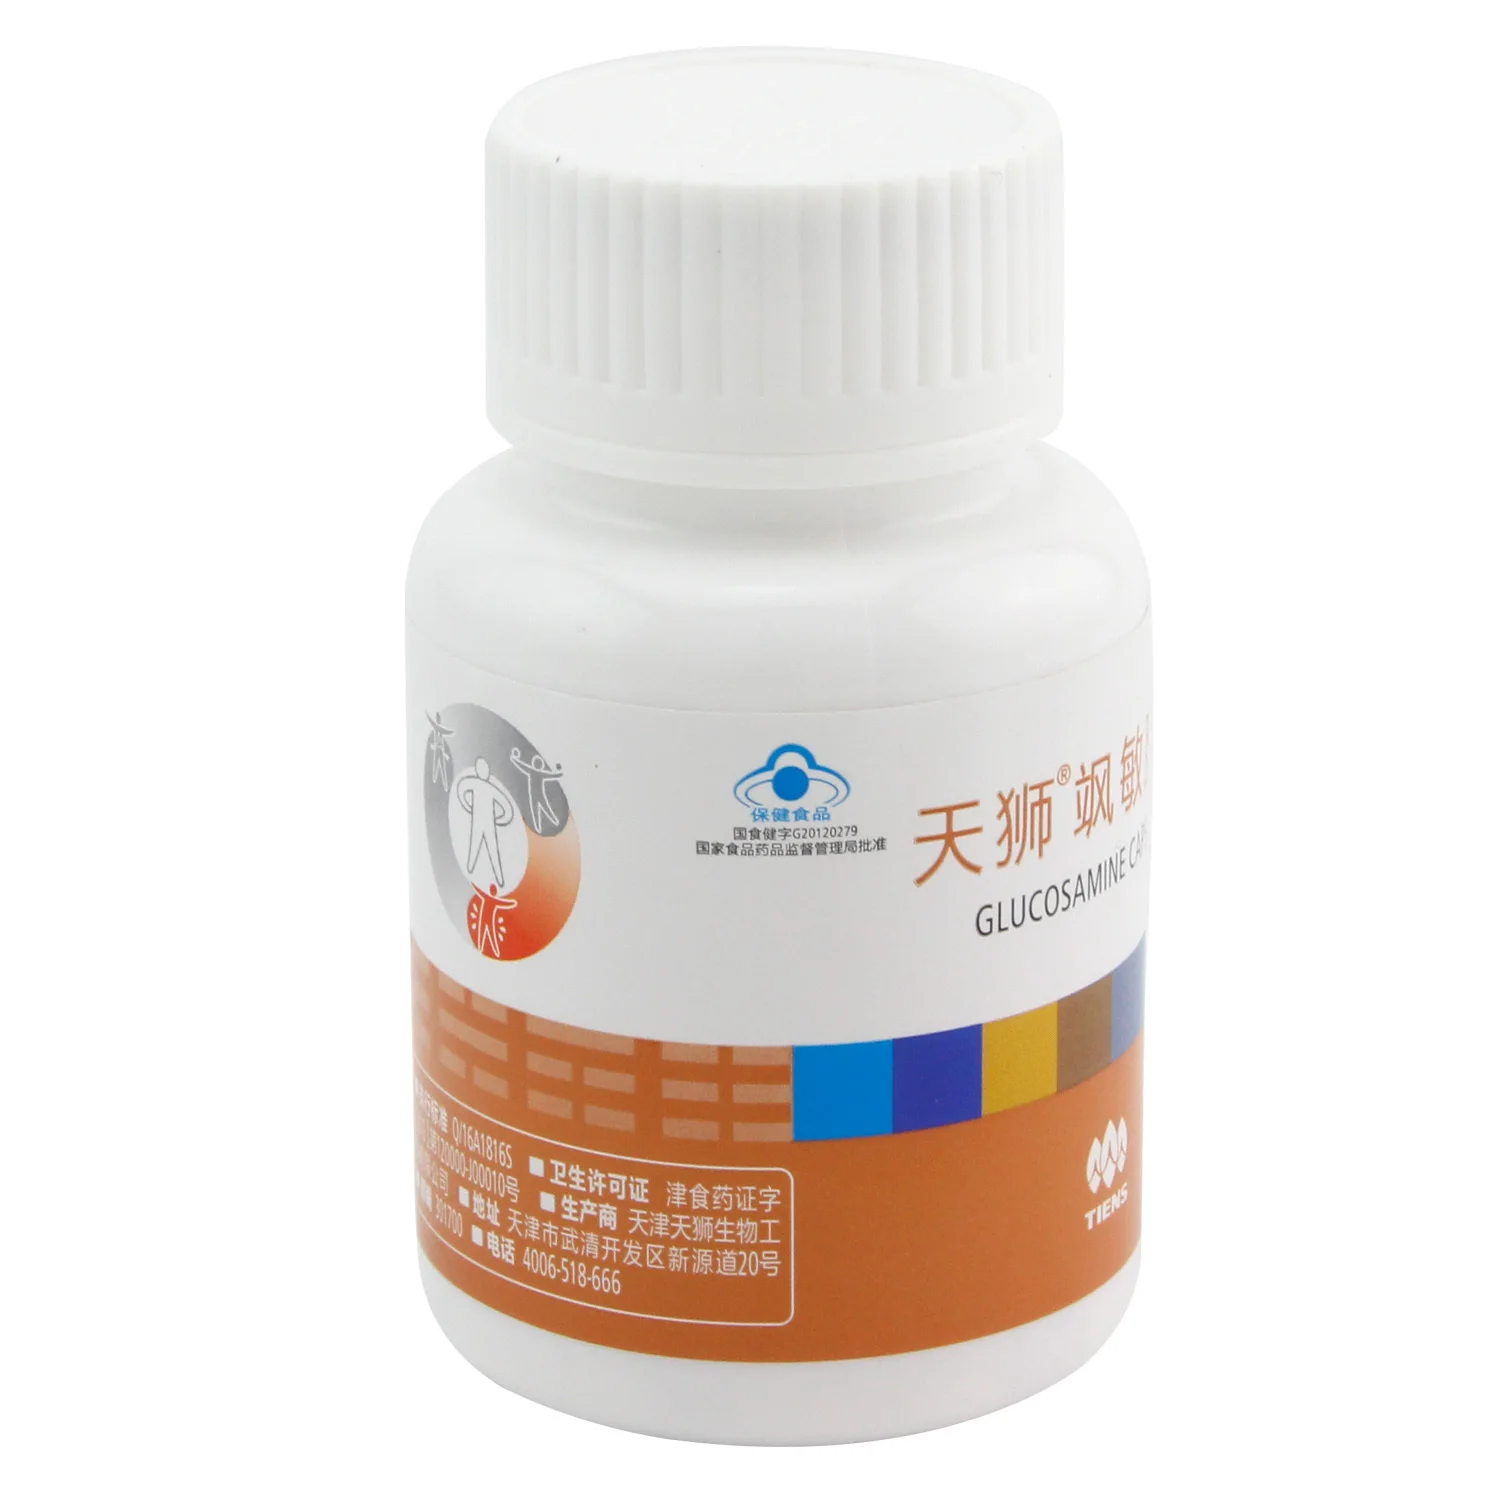 

Days lion brand sayin * 60 min capsule 0.4 g/grain increase bone mineral density in the elderly